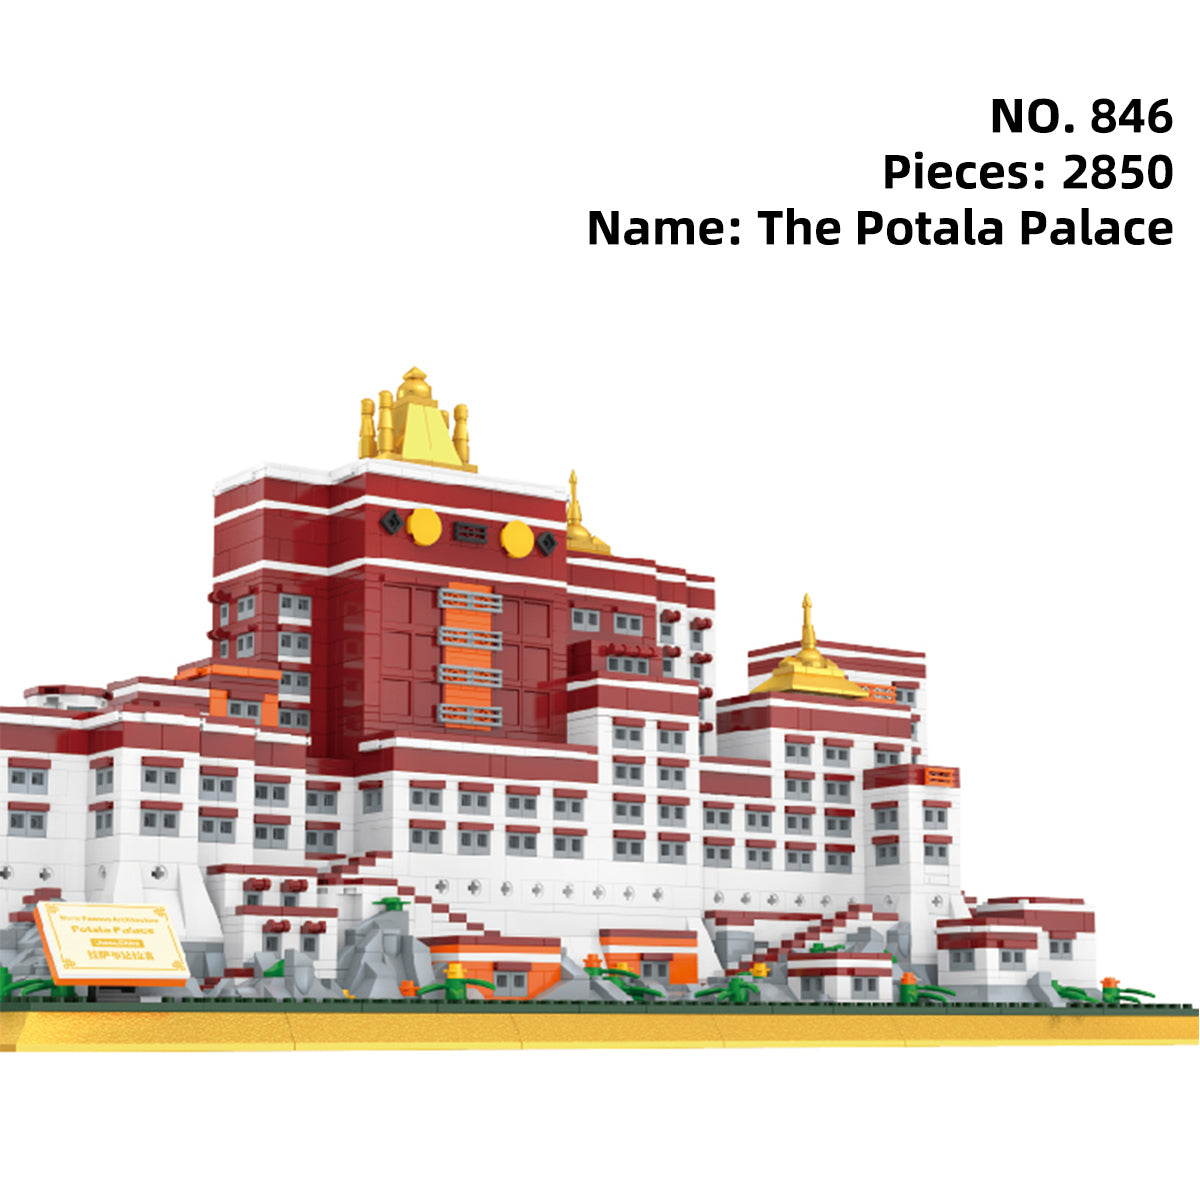 #Buildings_The Potala Palace